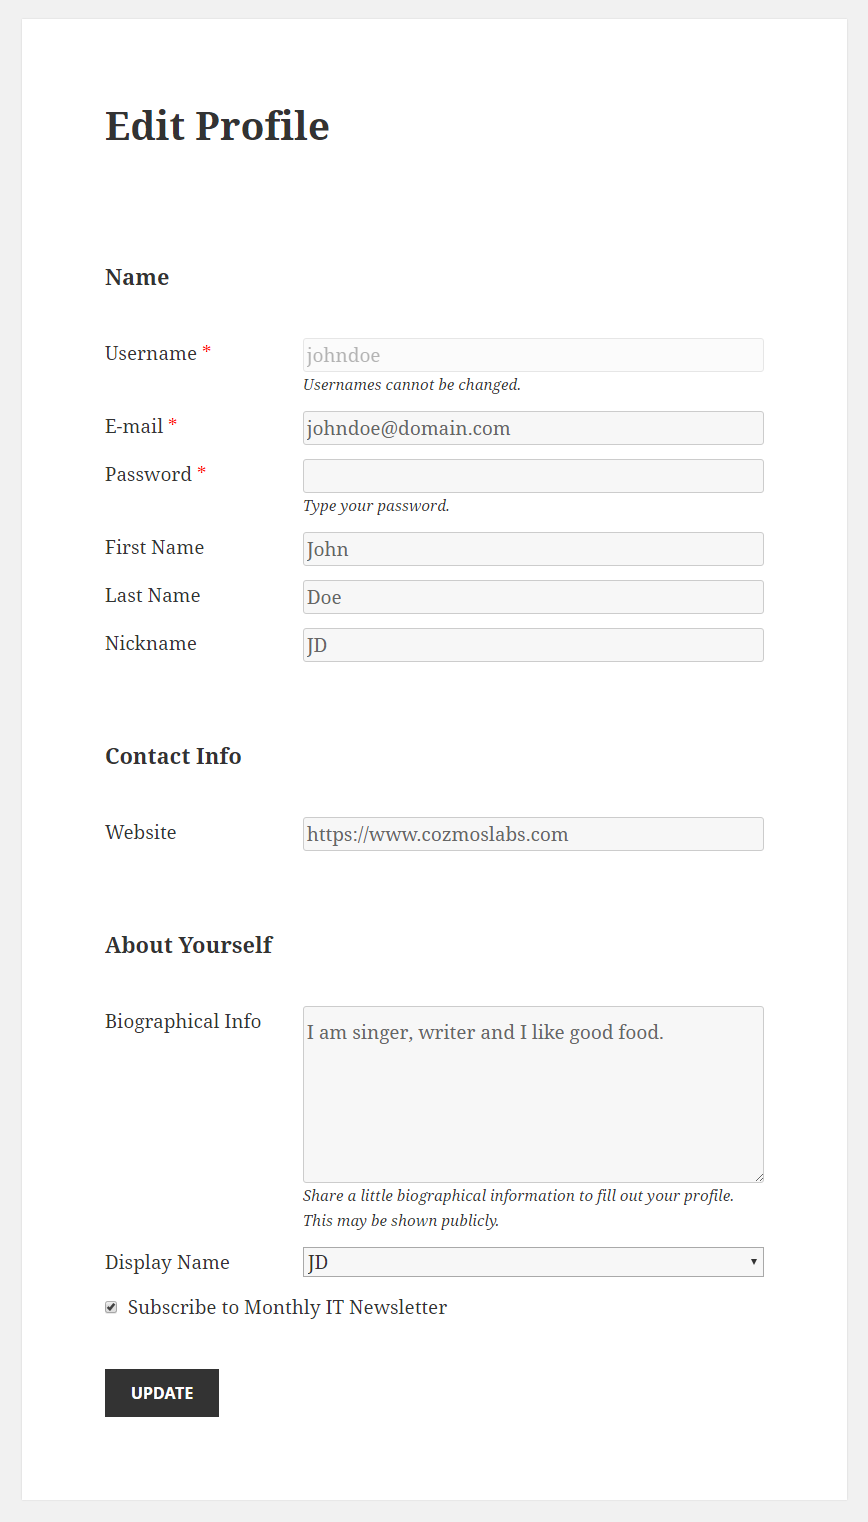 Profile Builder Pro - MailPoet - Edit Profile Form